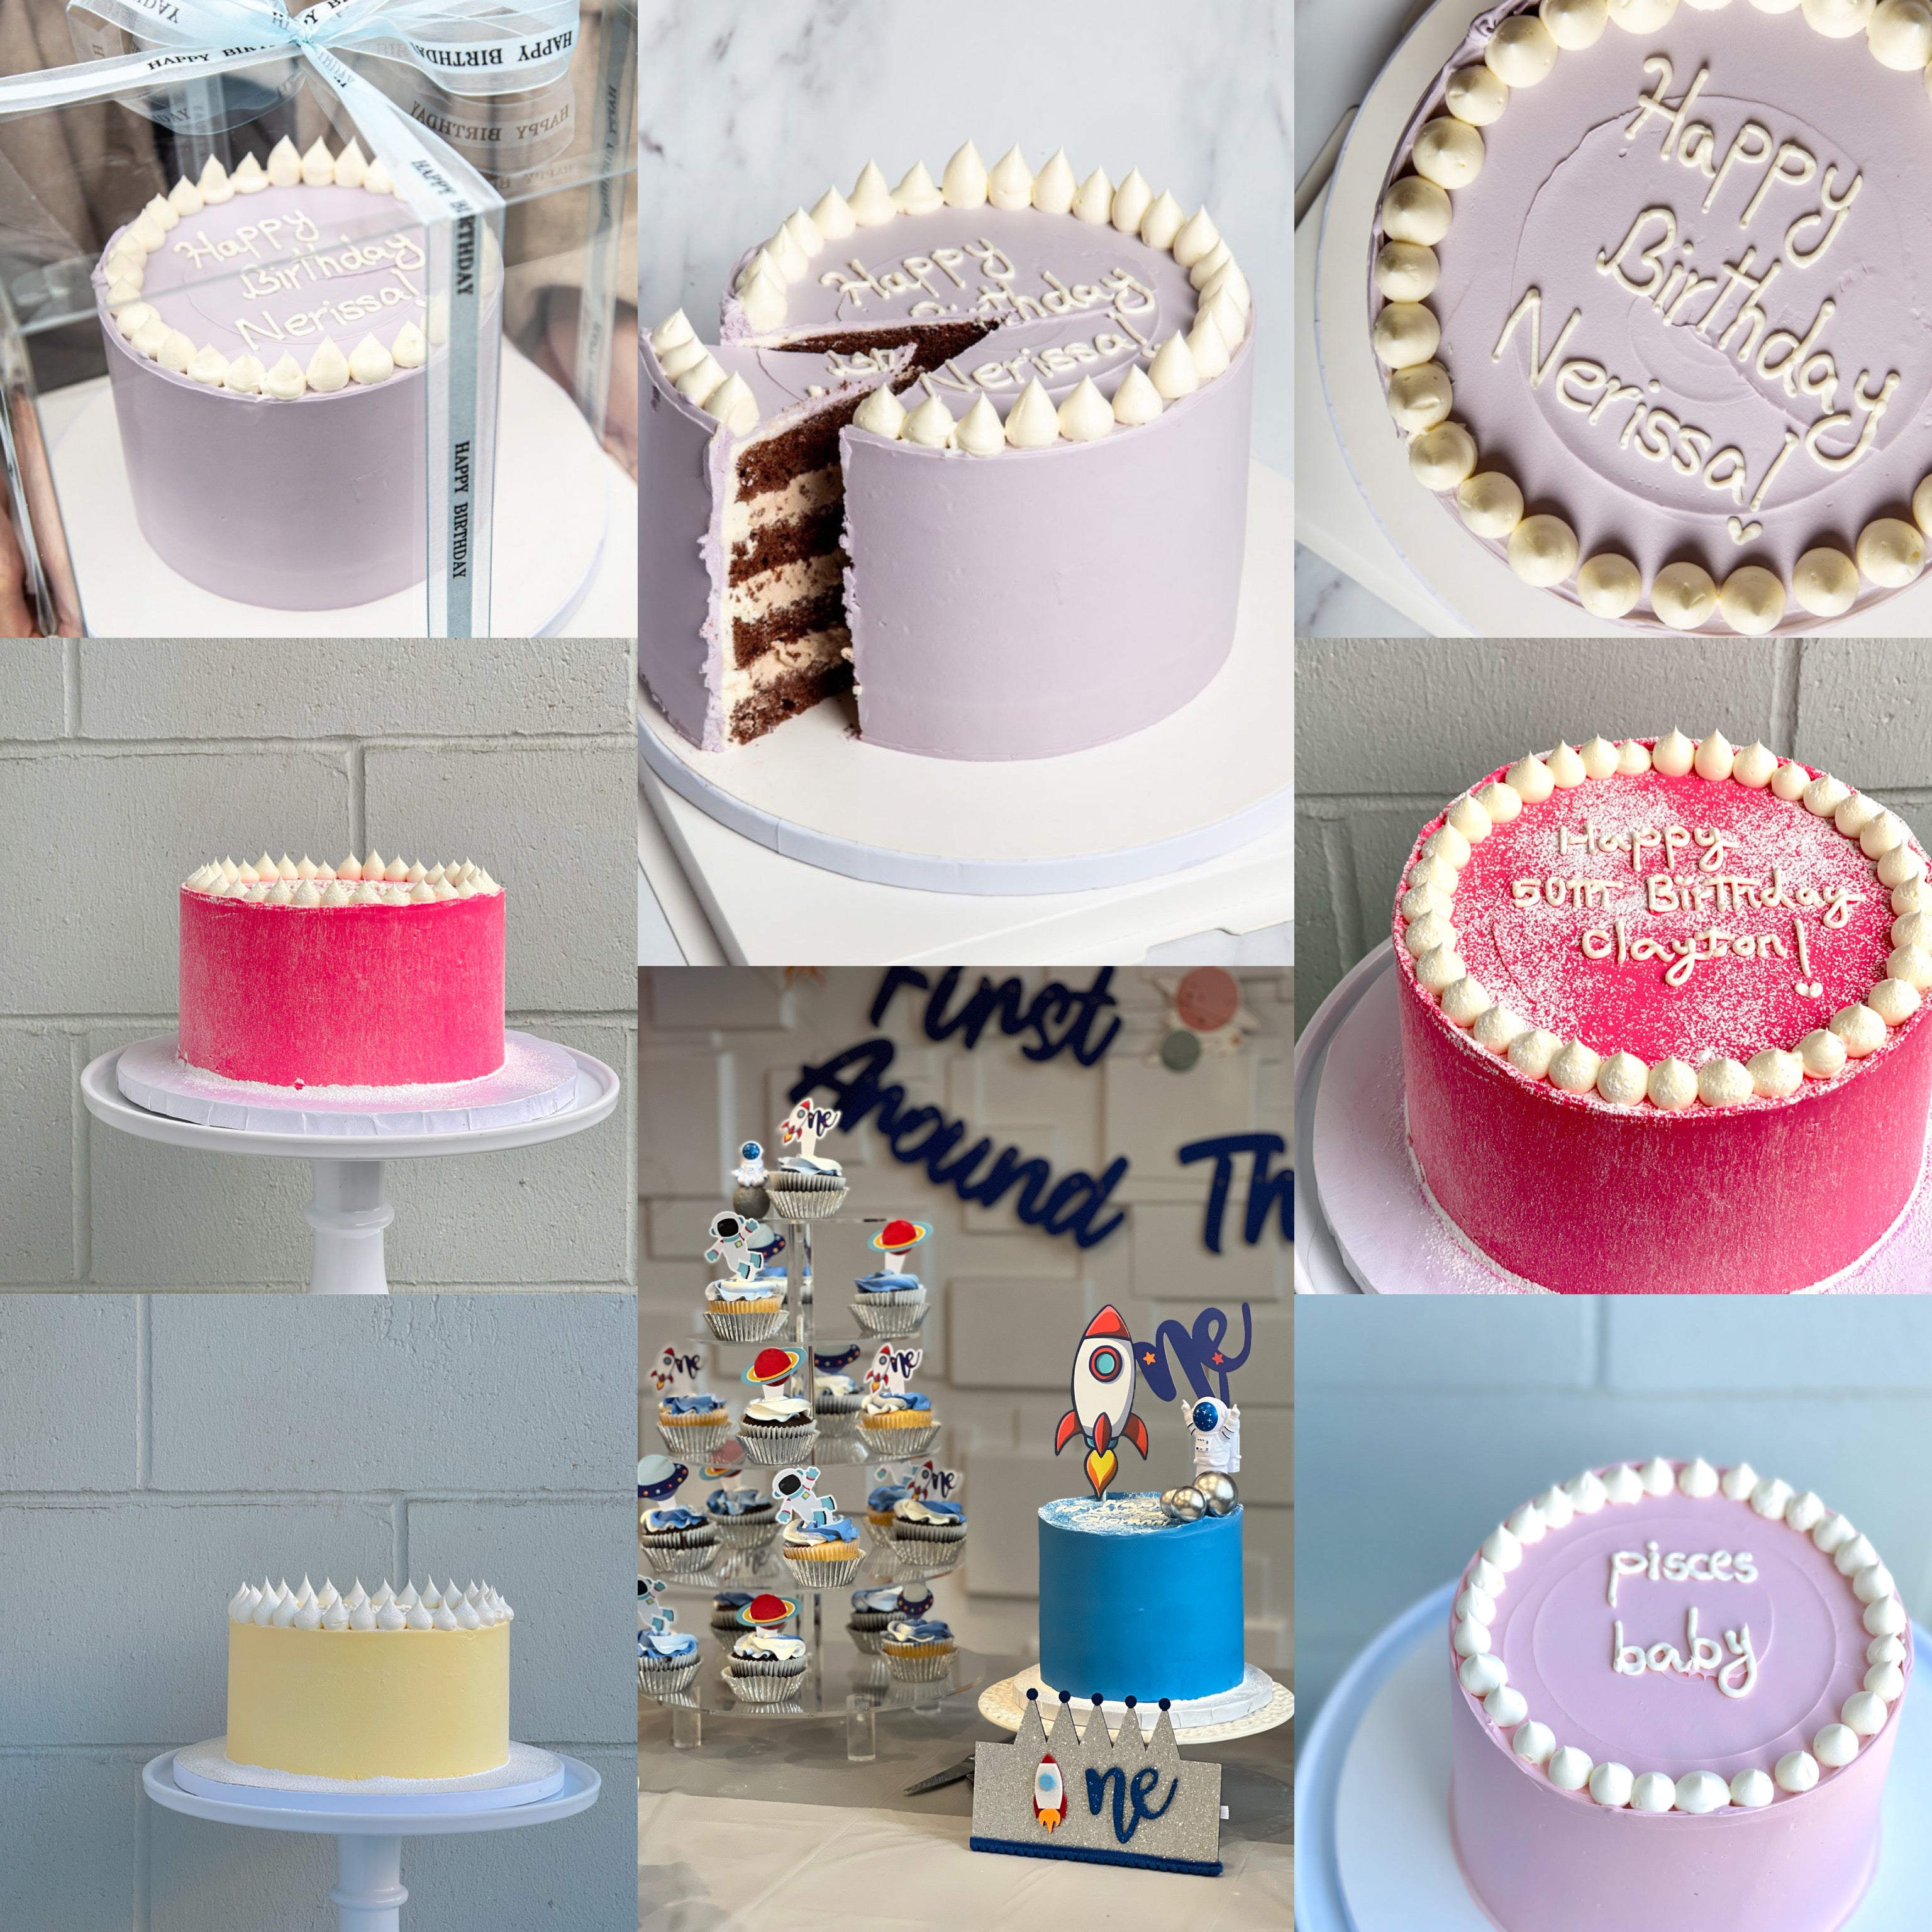 Custom cake, Custom desserts, cupcakes, cookies, chocolates